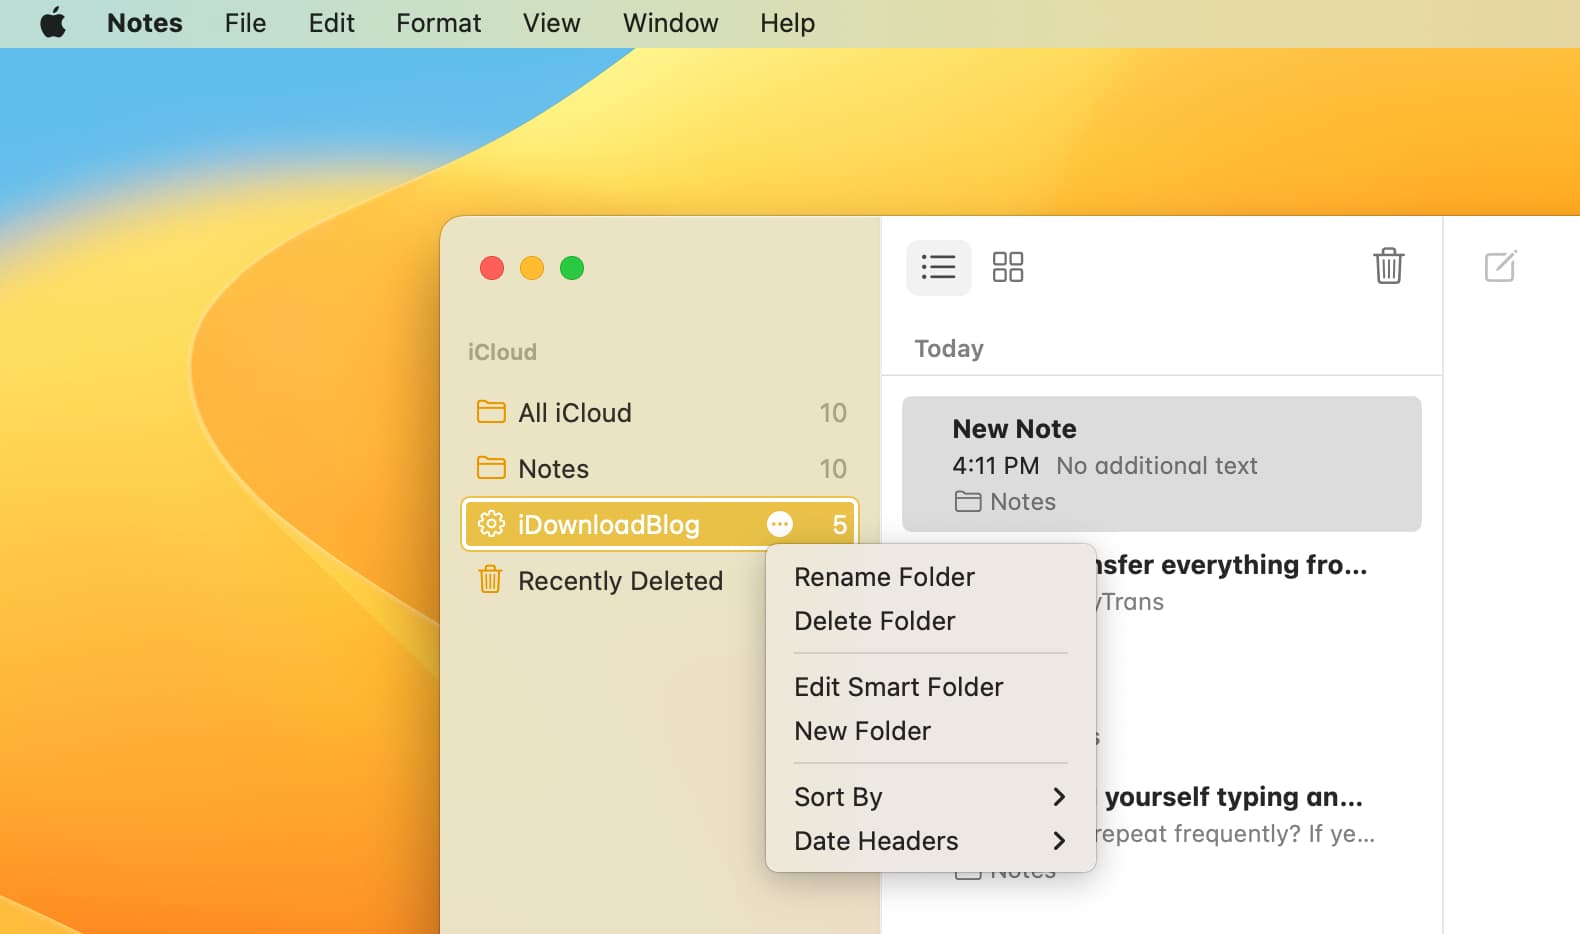 Rename, edit, or delete Smart Folder on Mac